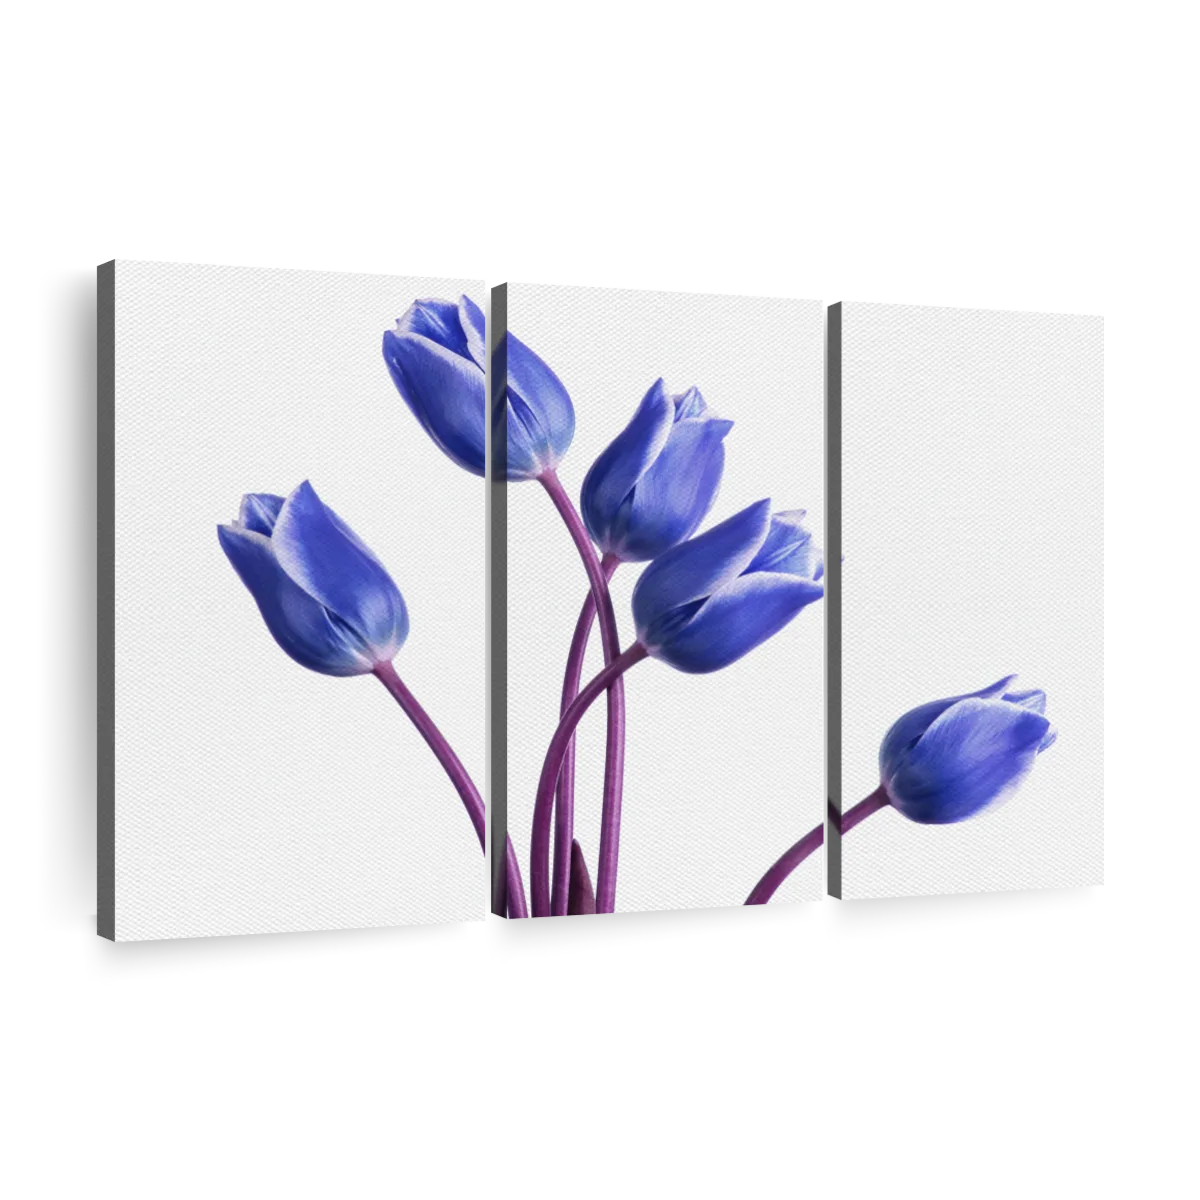 purple tulips png